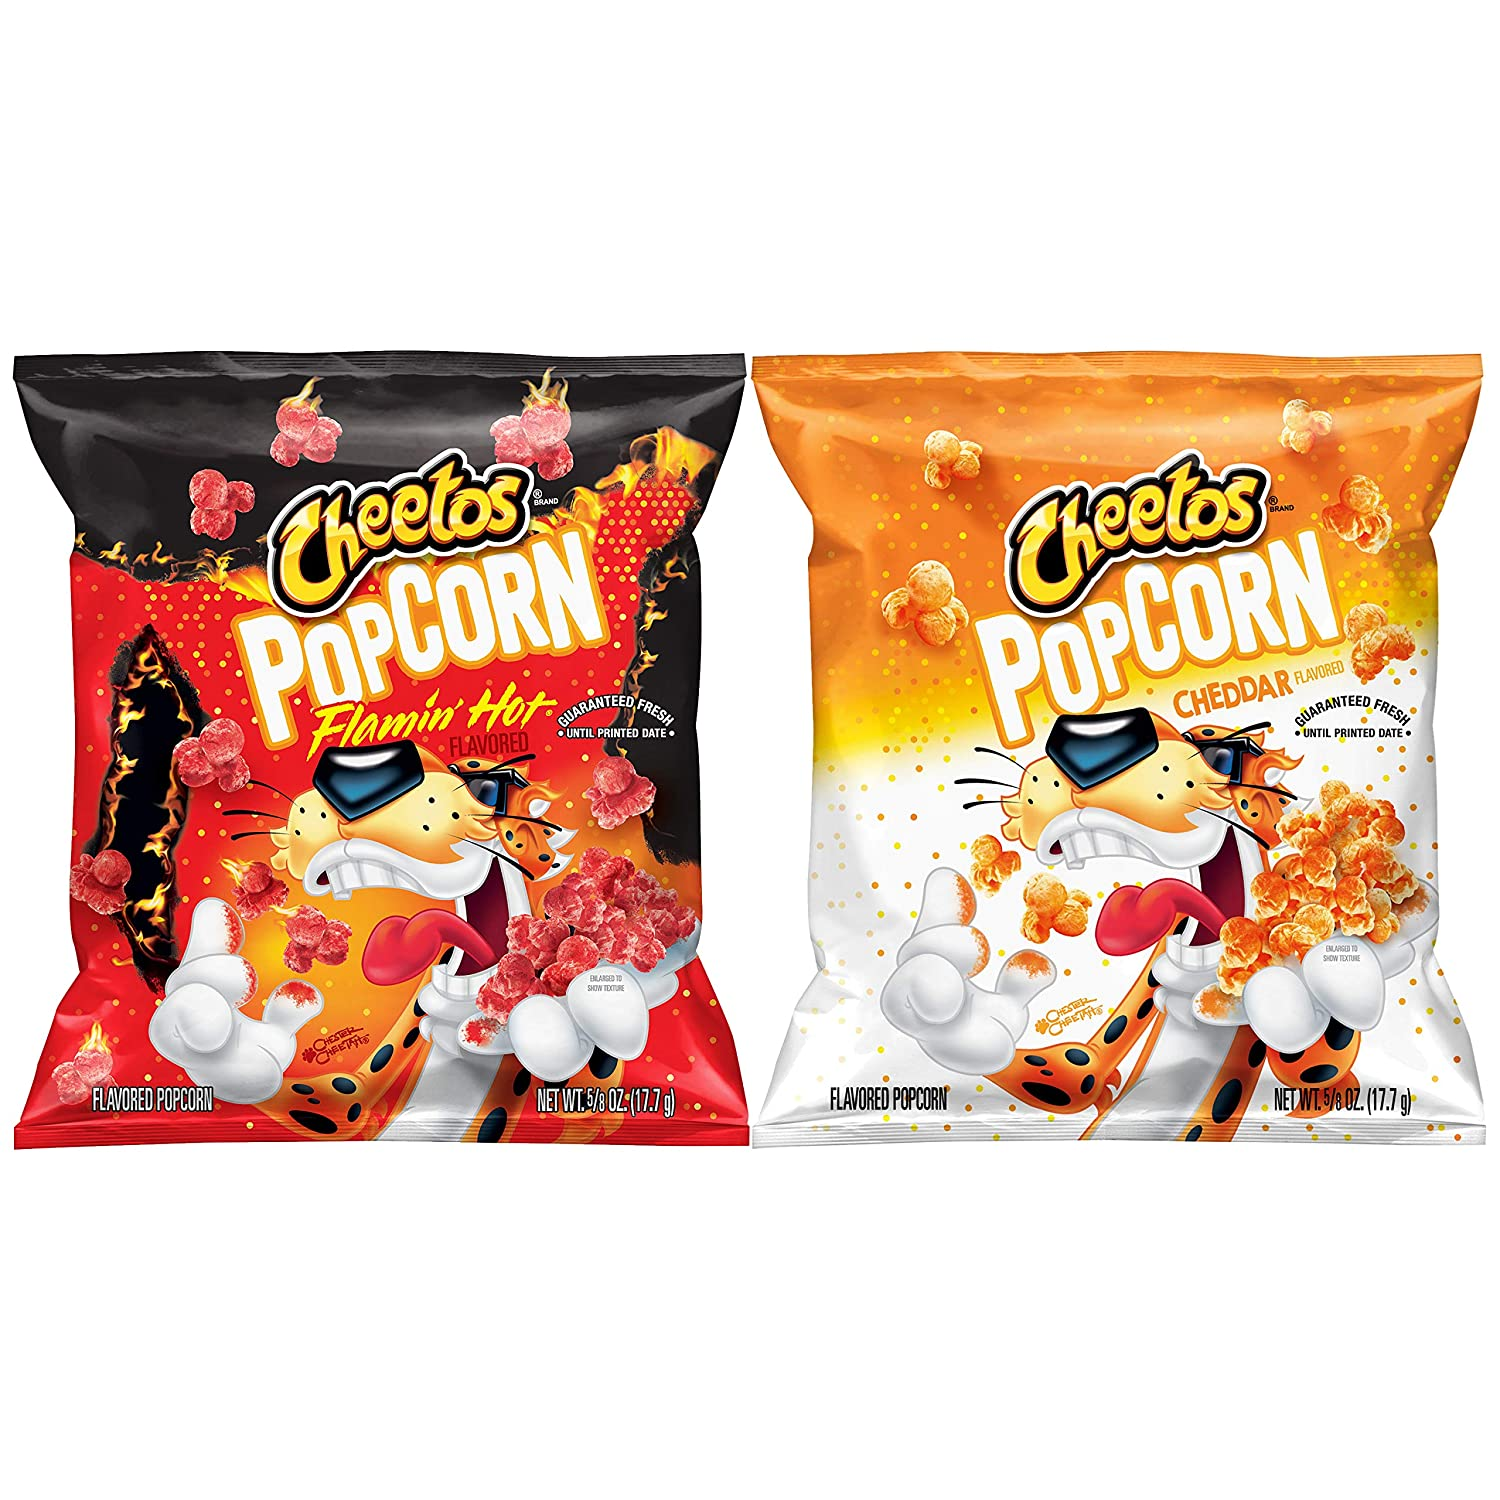 Amazon.com : Cheetos Popcorn, Cheddar & Flamin' Hot Variety Pack,0.625oz (Pack of 40) $10.30